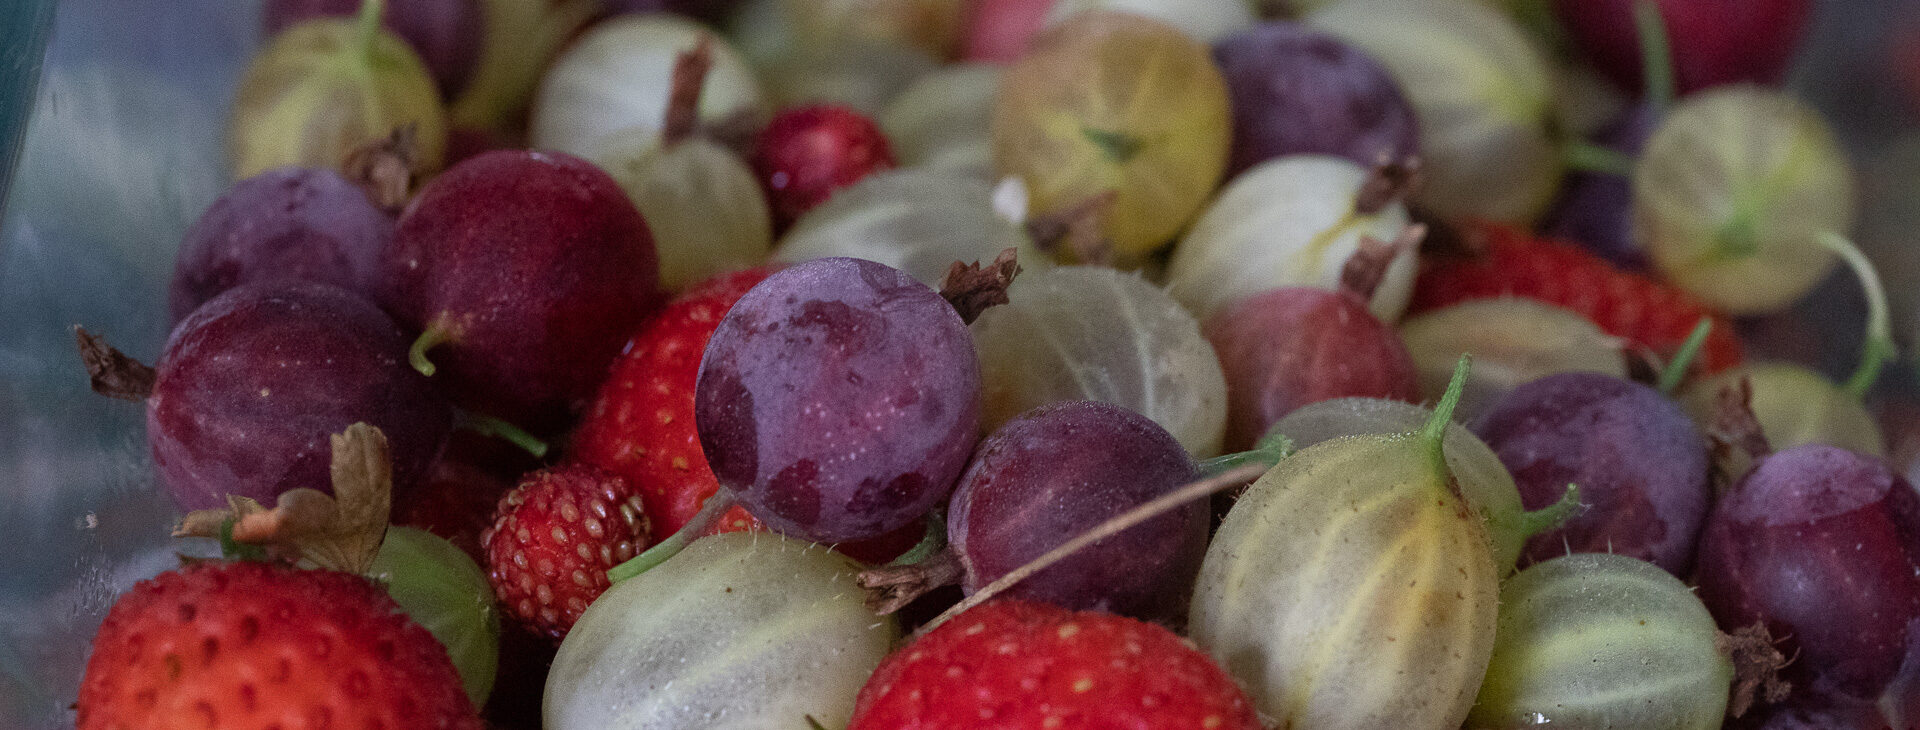 Petits fruits